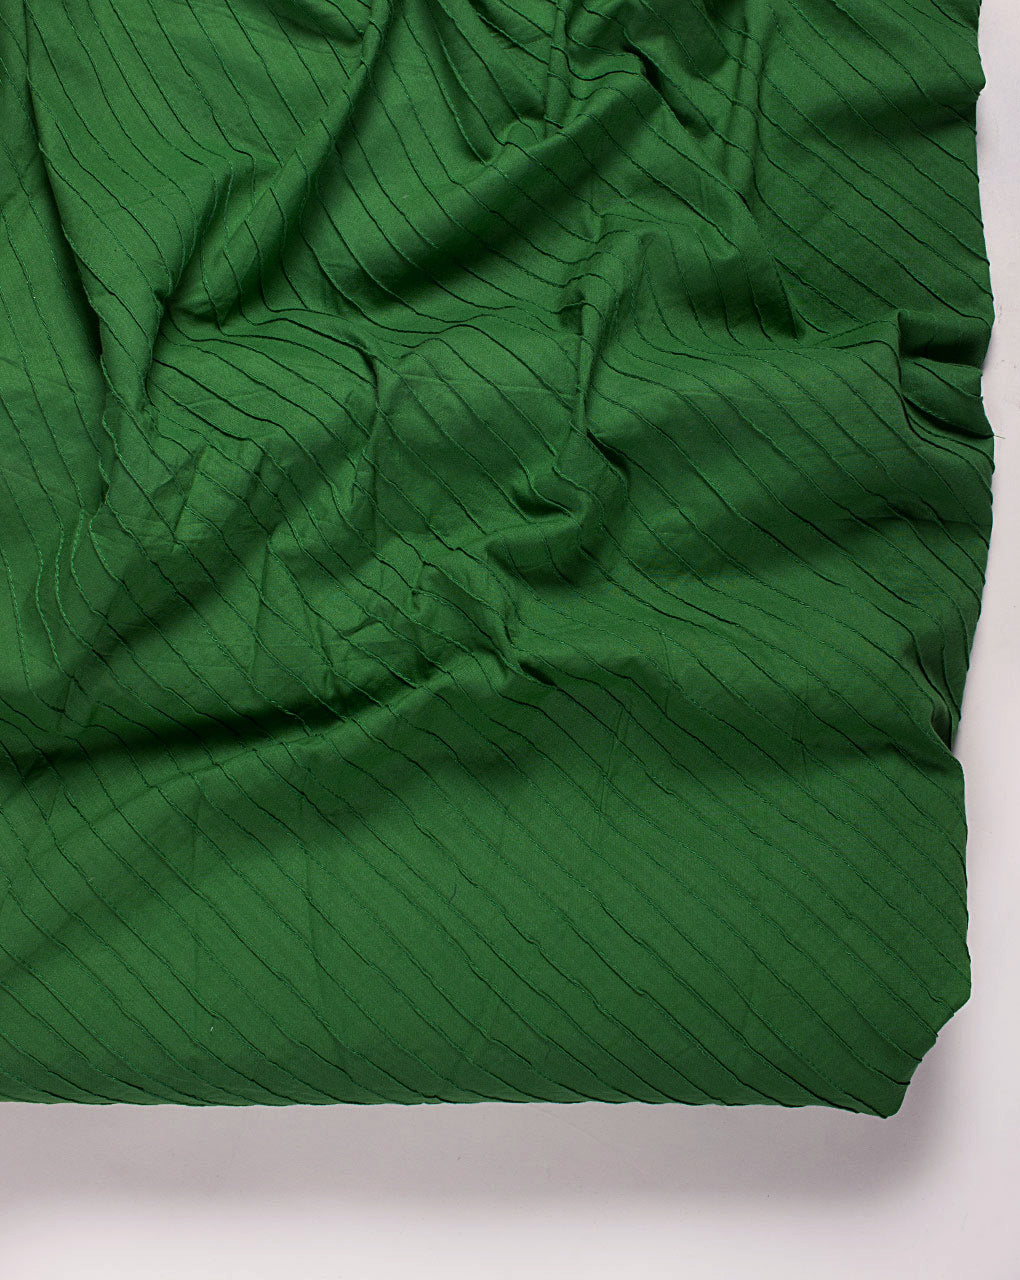 Green Pin-Tucks Cotton Fabric